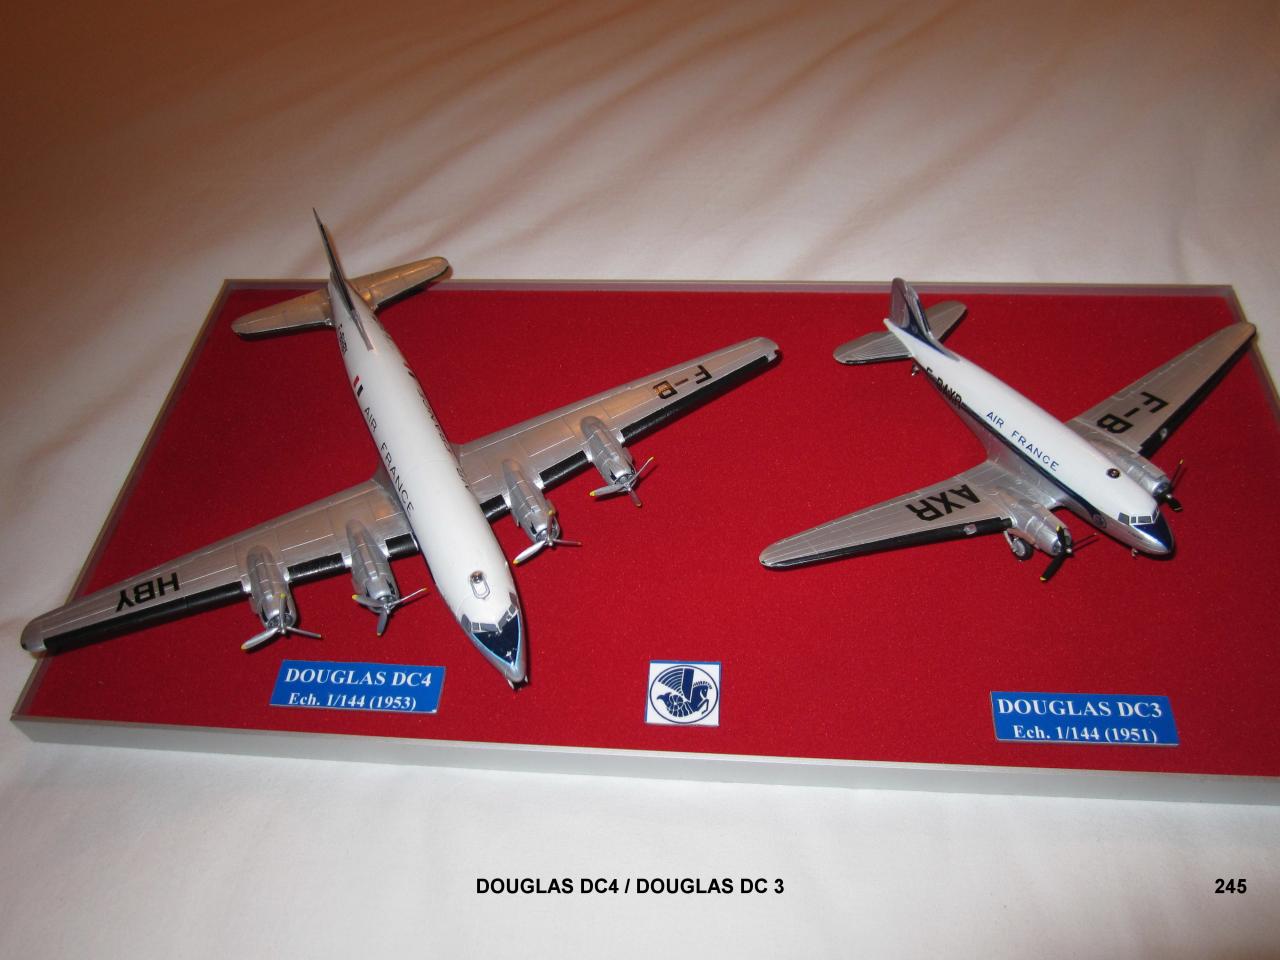 DOUGLAS DC4 - DOUGLAS DC3 AIR FRANCE